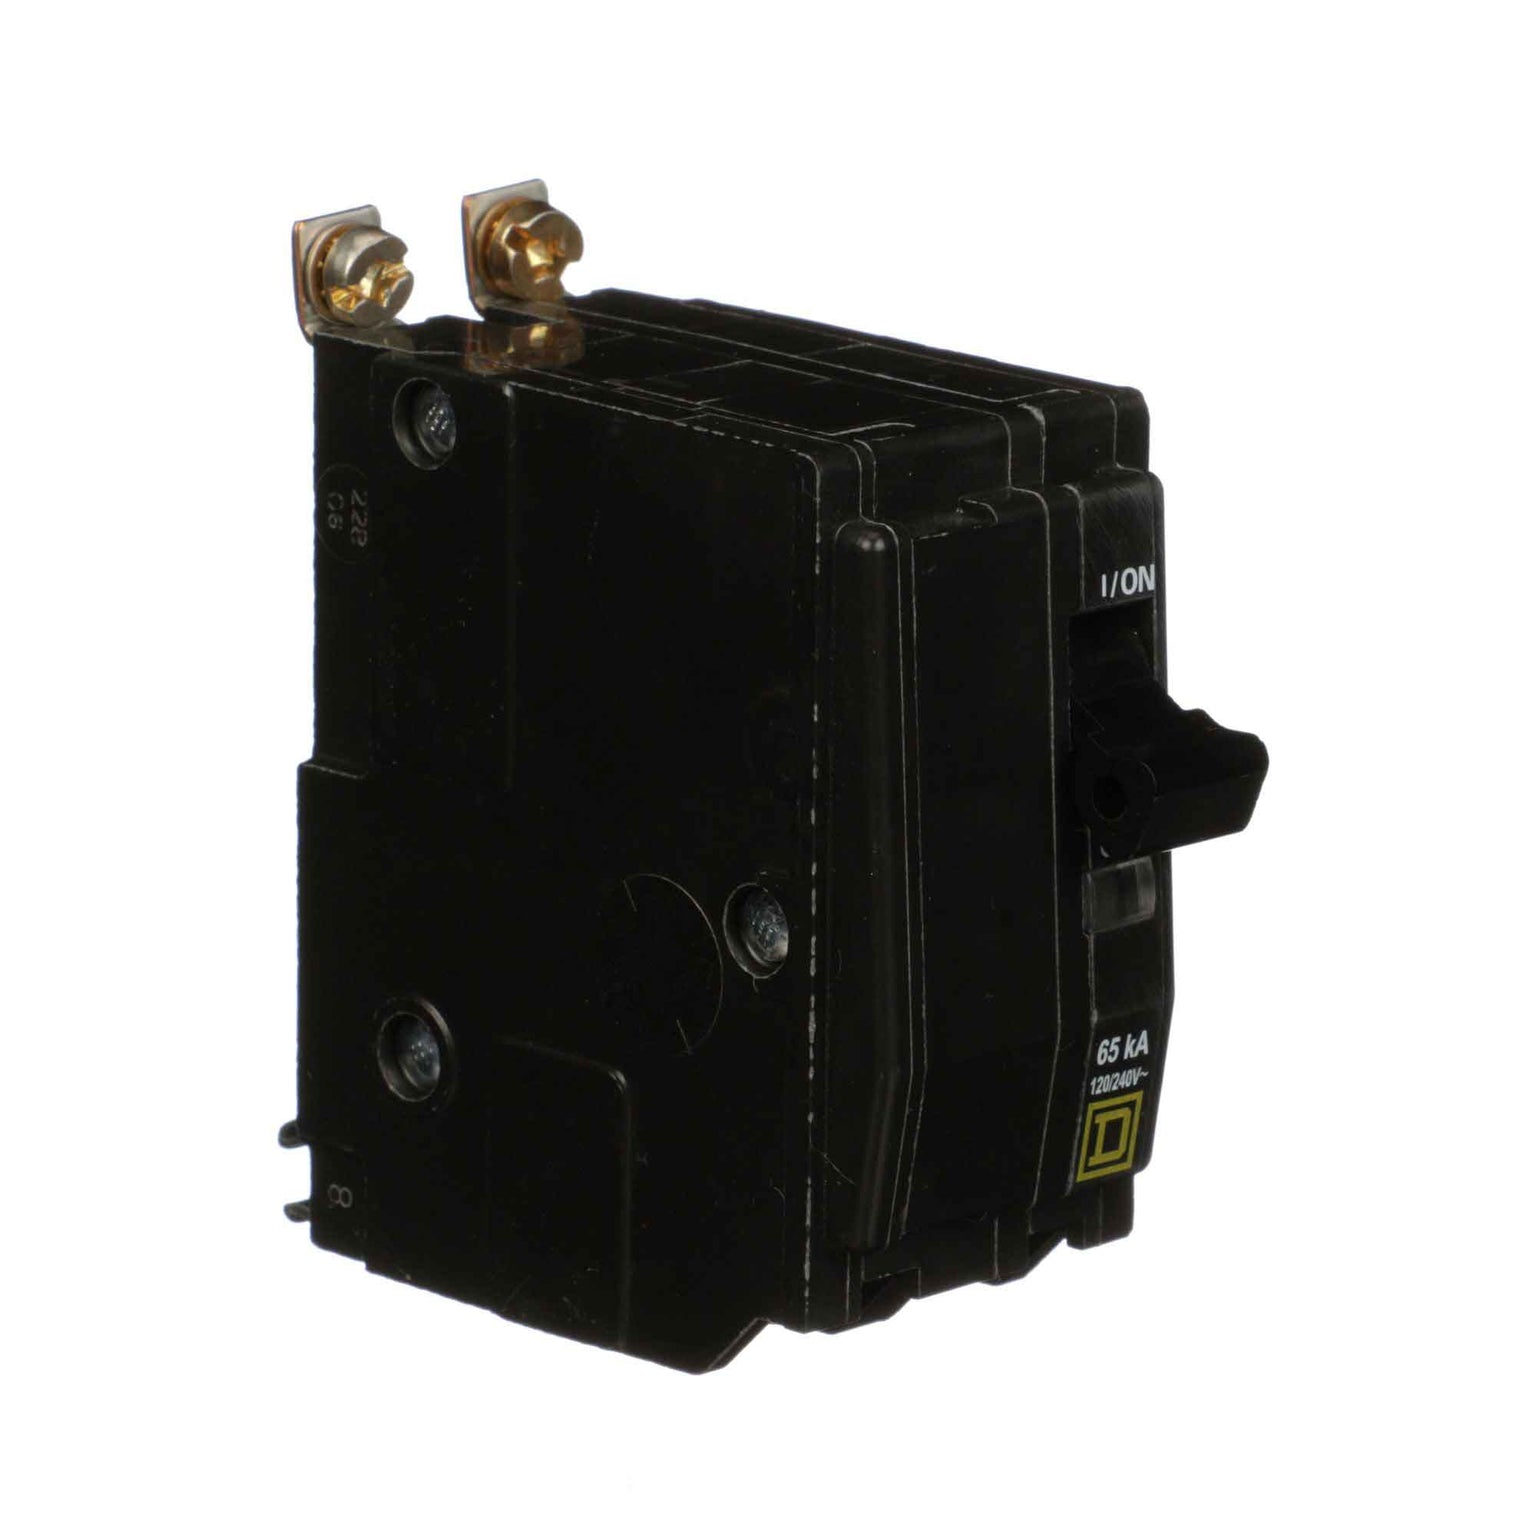 QHB215 - Square D - Molded Case Circuit Breakers